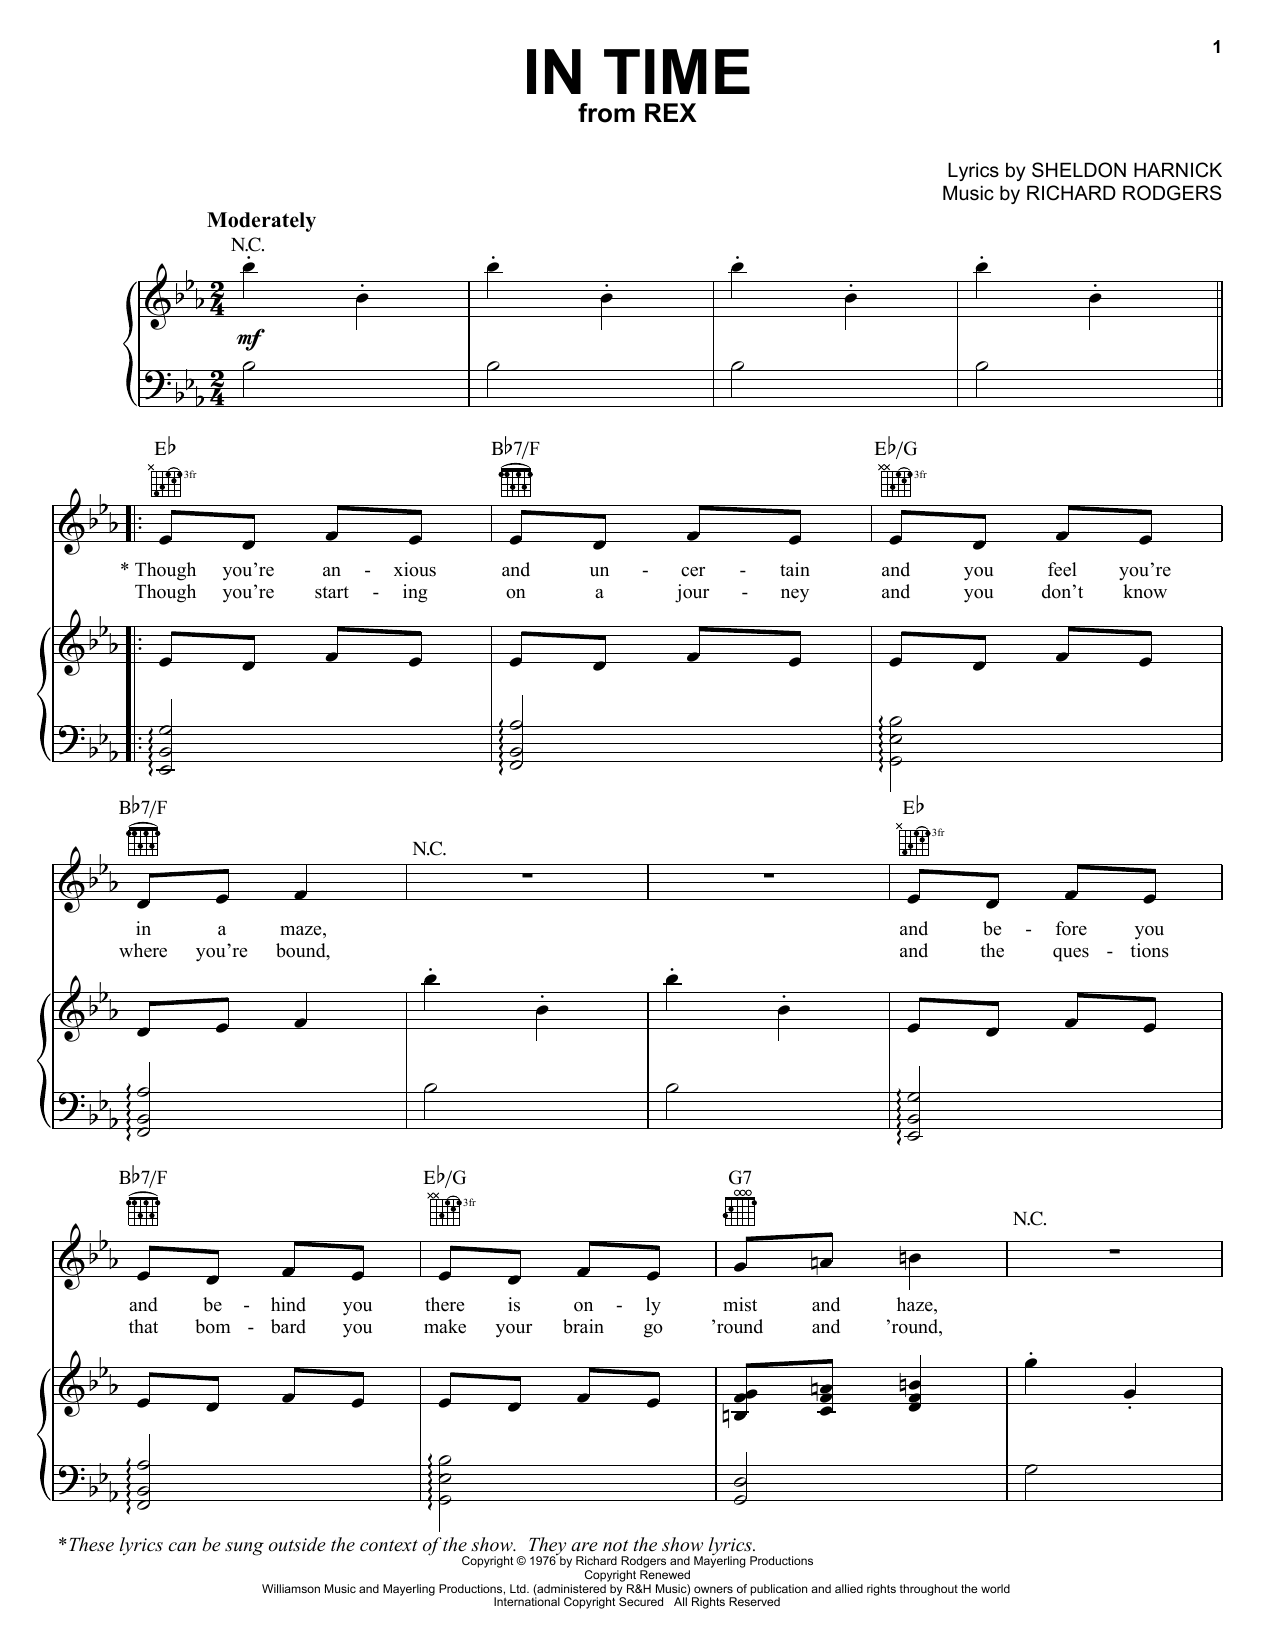 Richard Rodgers In Time sheet music notes printable PDF score